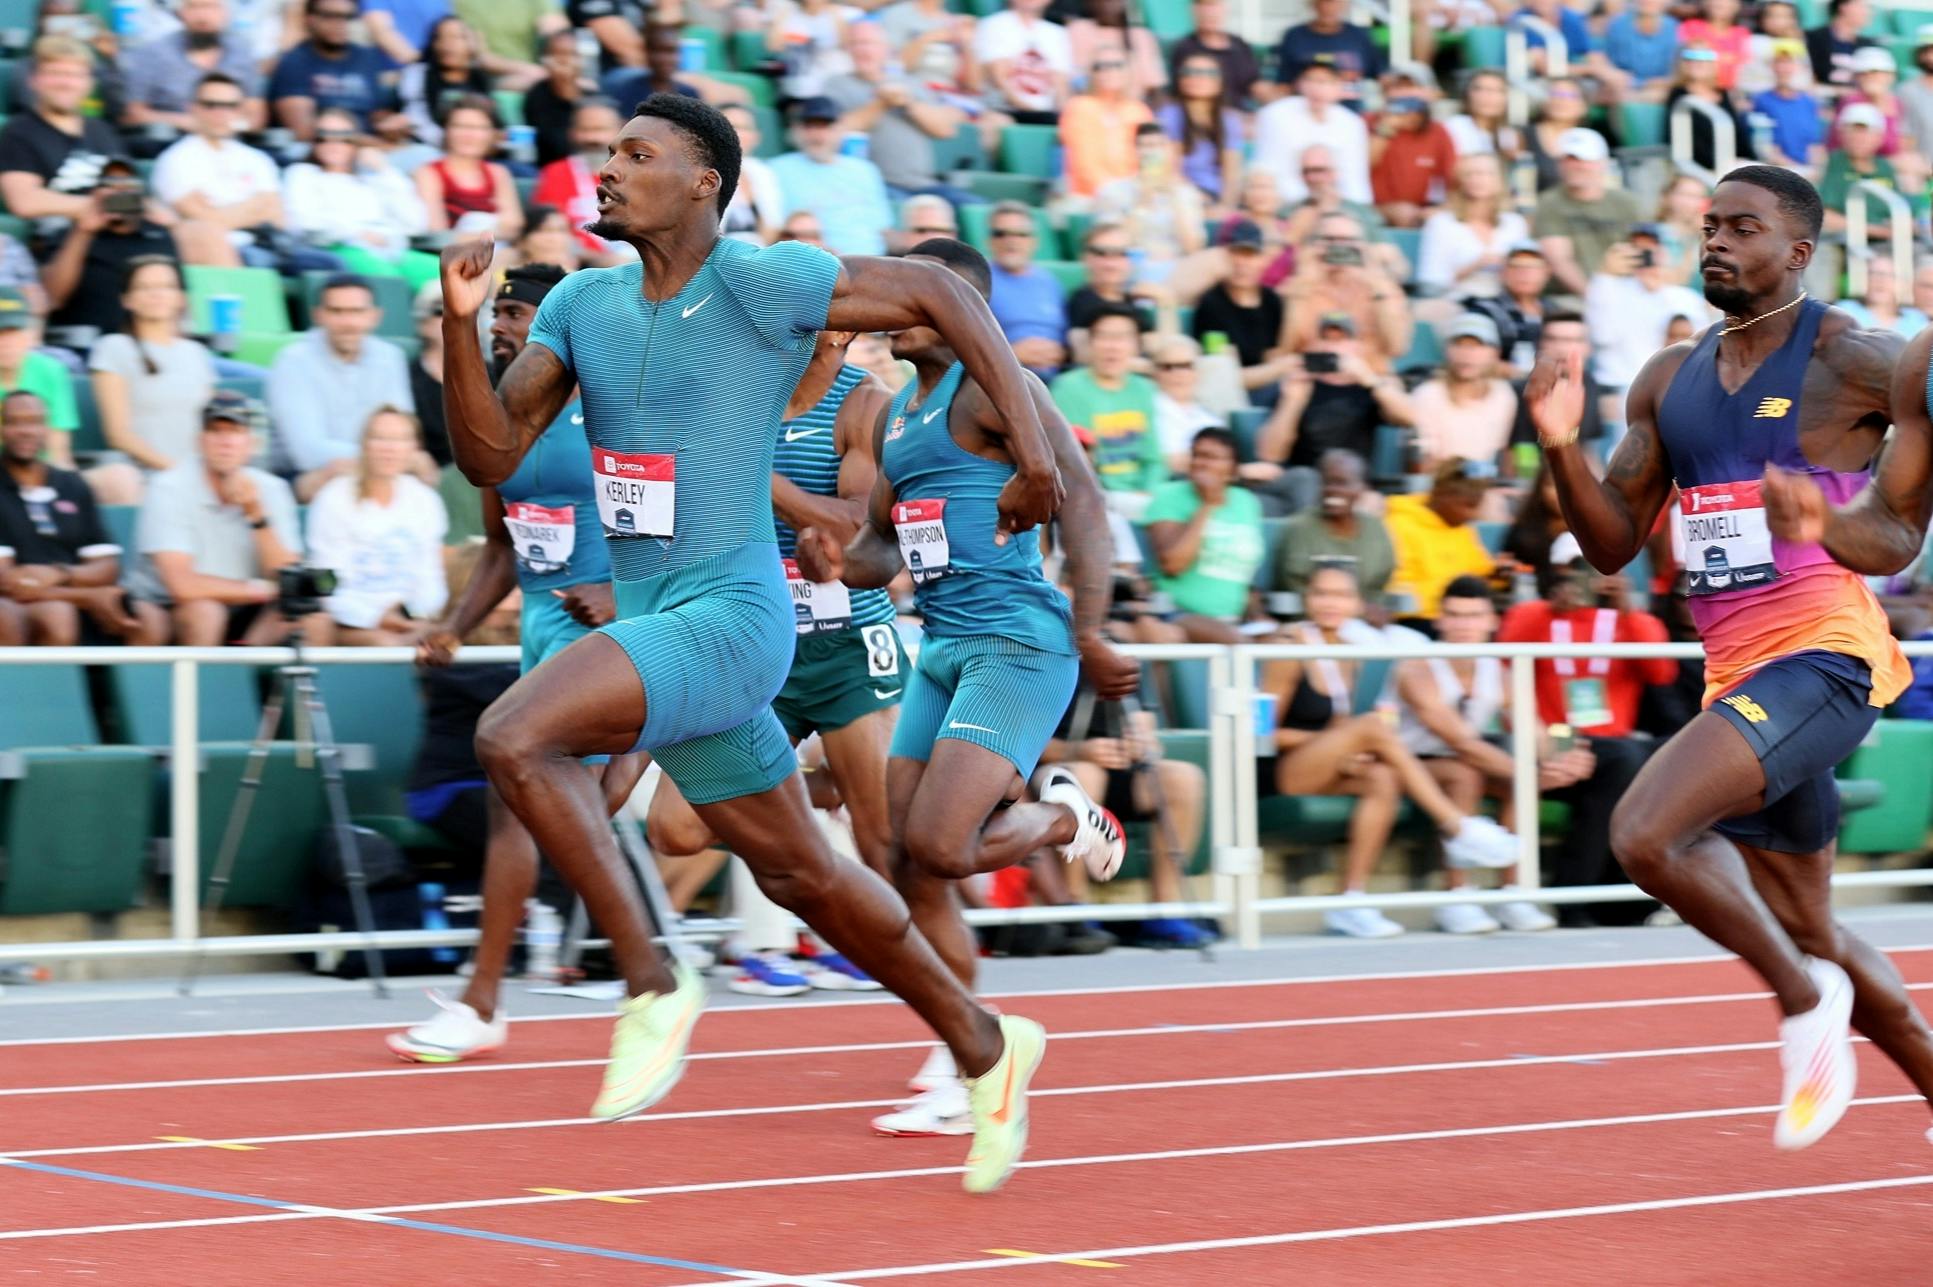 Fred Kerley: Η λεπτομέρεια από την κούρσα του στα 100μ. του πρωταθλήματος των ΗΠΑ που… θυμίζει Bolt